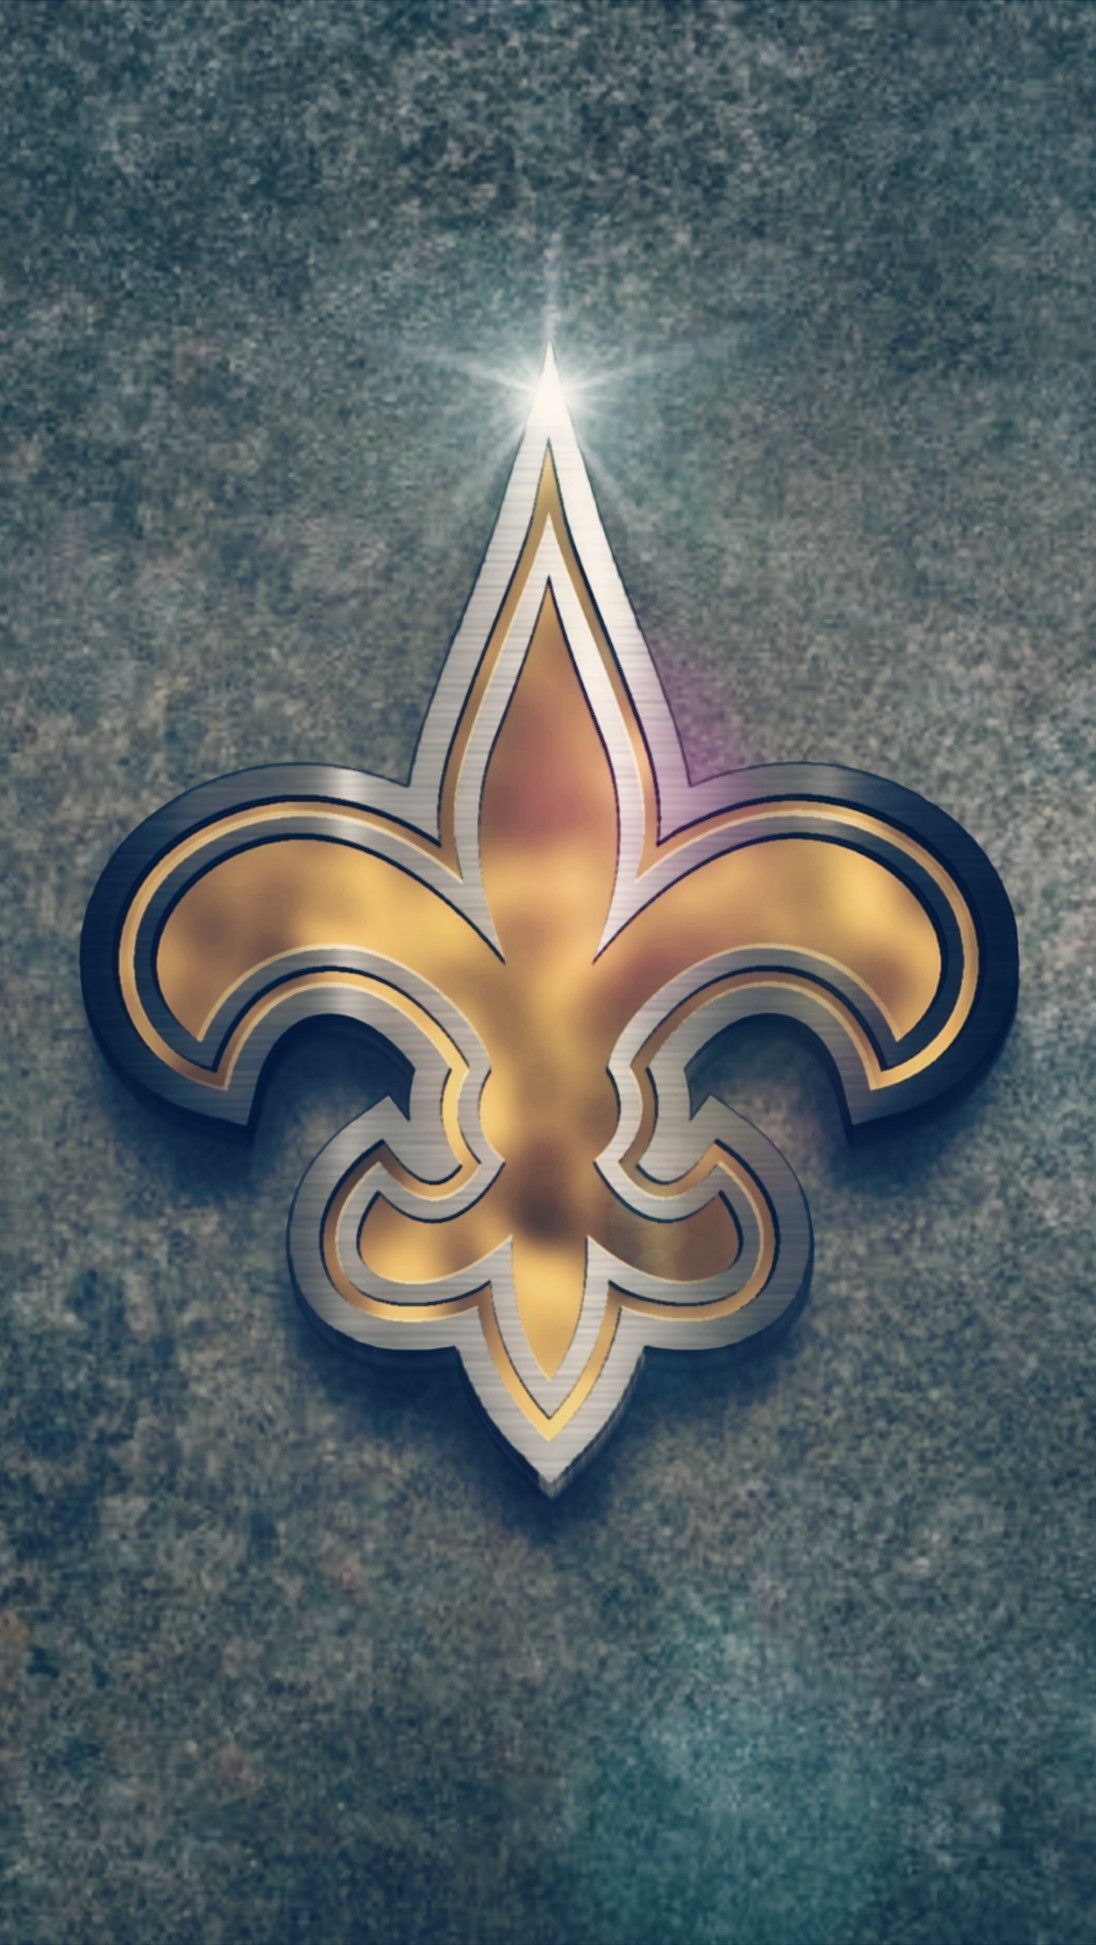 NFL New Orleans Logo Wallpaper. Nfl football art, New orleans saints football, New orleans saints logo